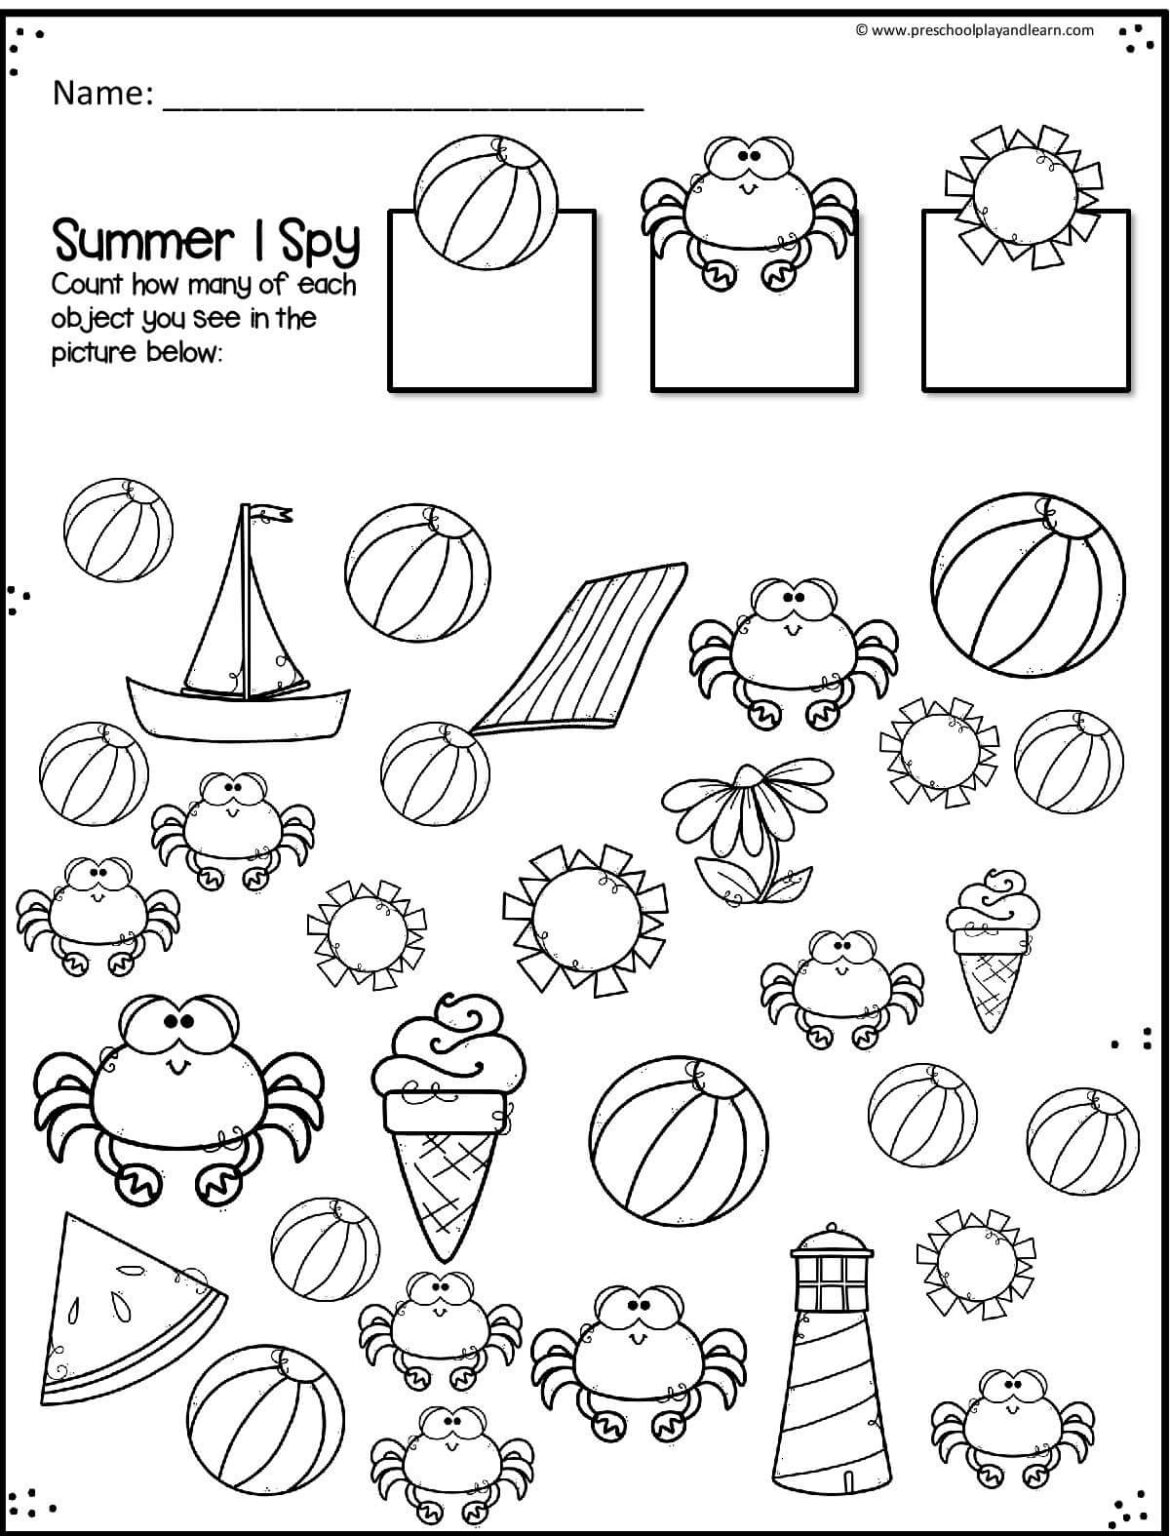  FREE Printable Summer Math Worksheets For Preschool